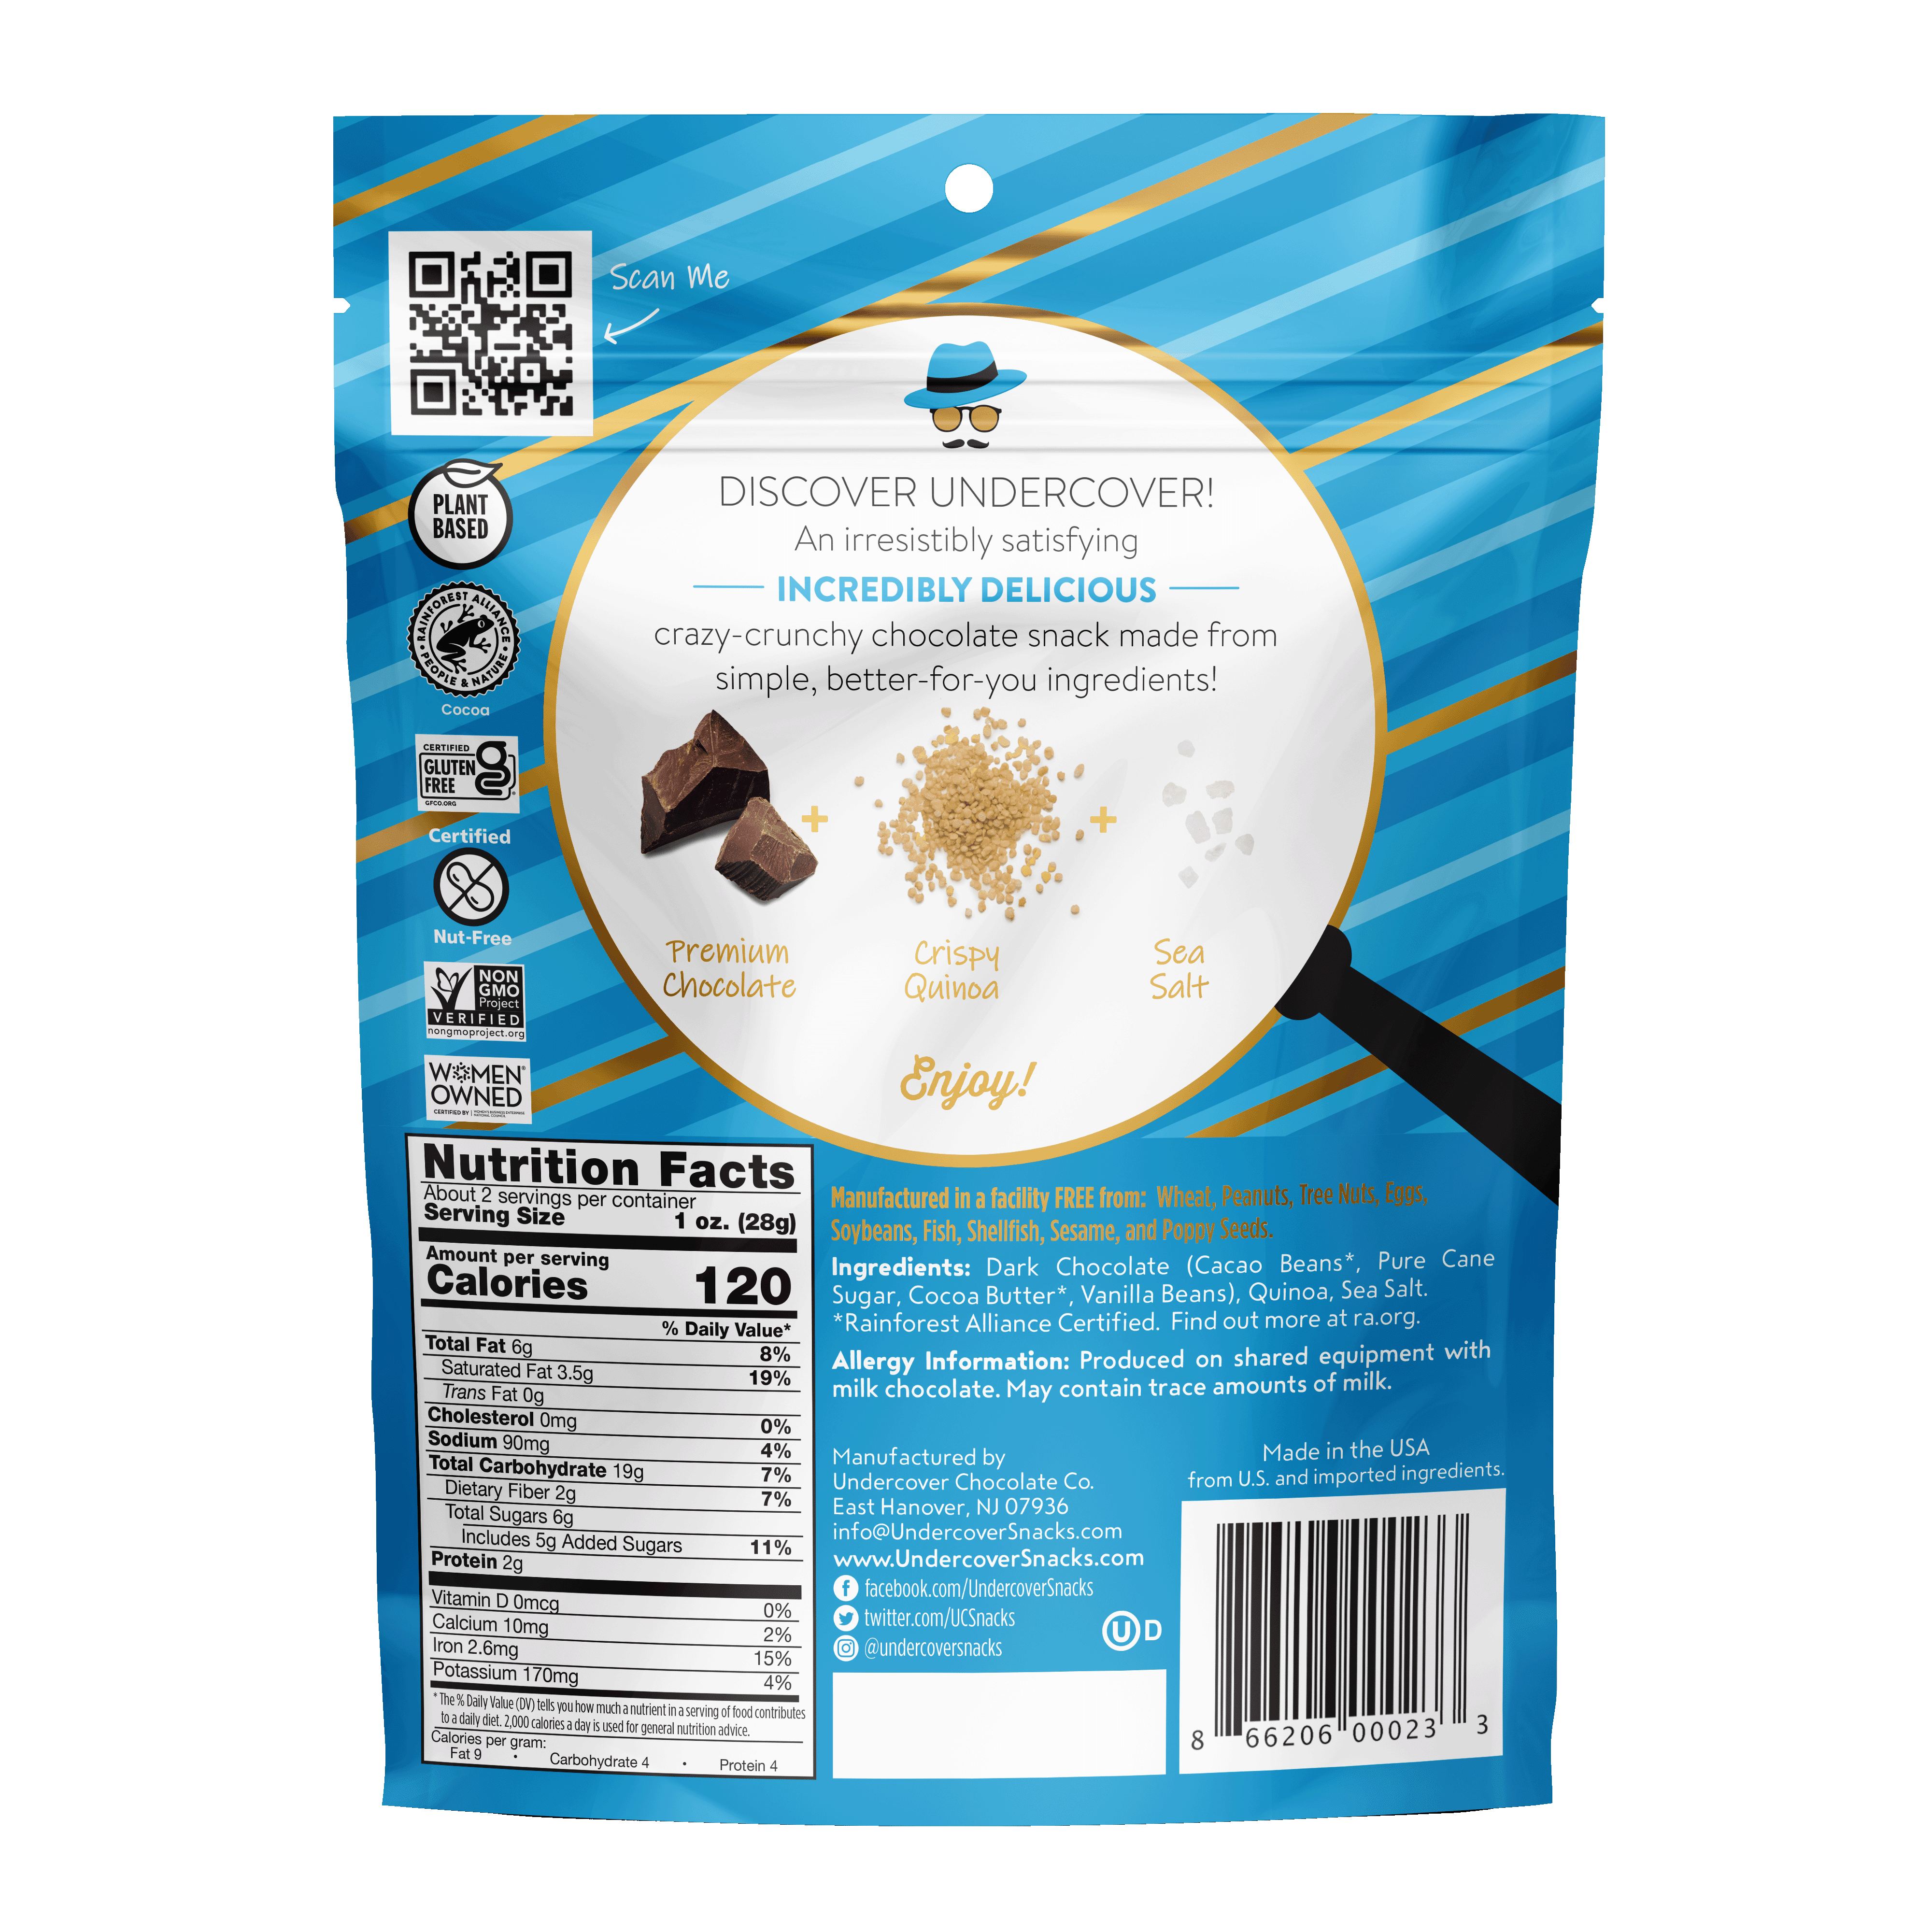 Save on Undercover Crispy Quinoa Dark Chocolate + Sea Salt Order